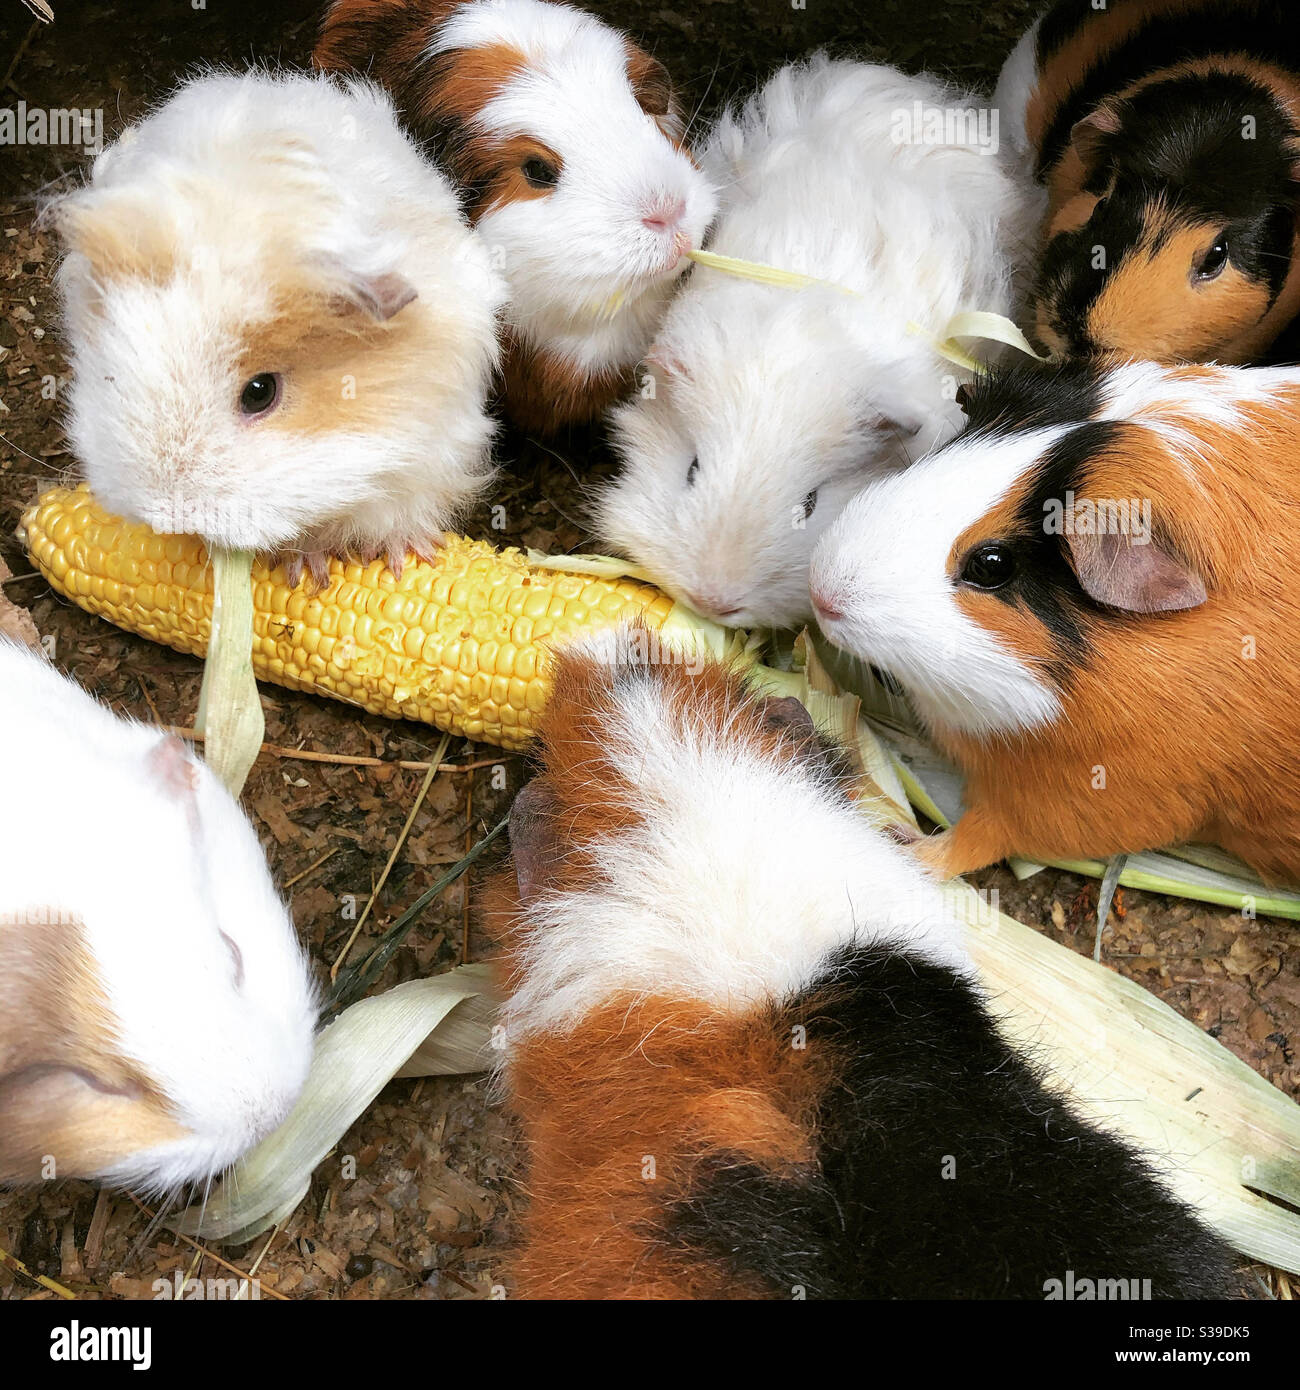 Guinea pigs eating sweetcorn Stock Photo